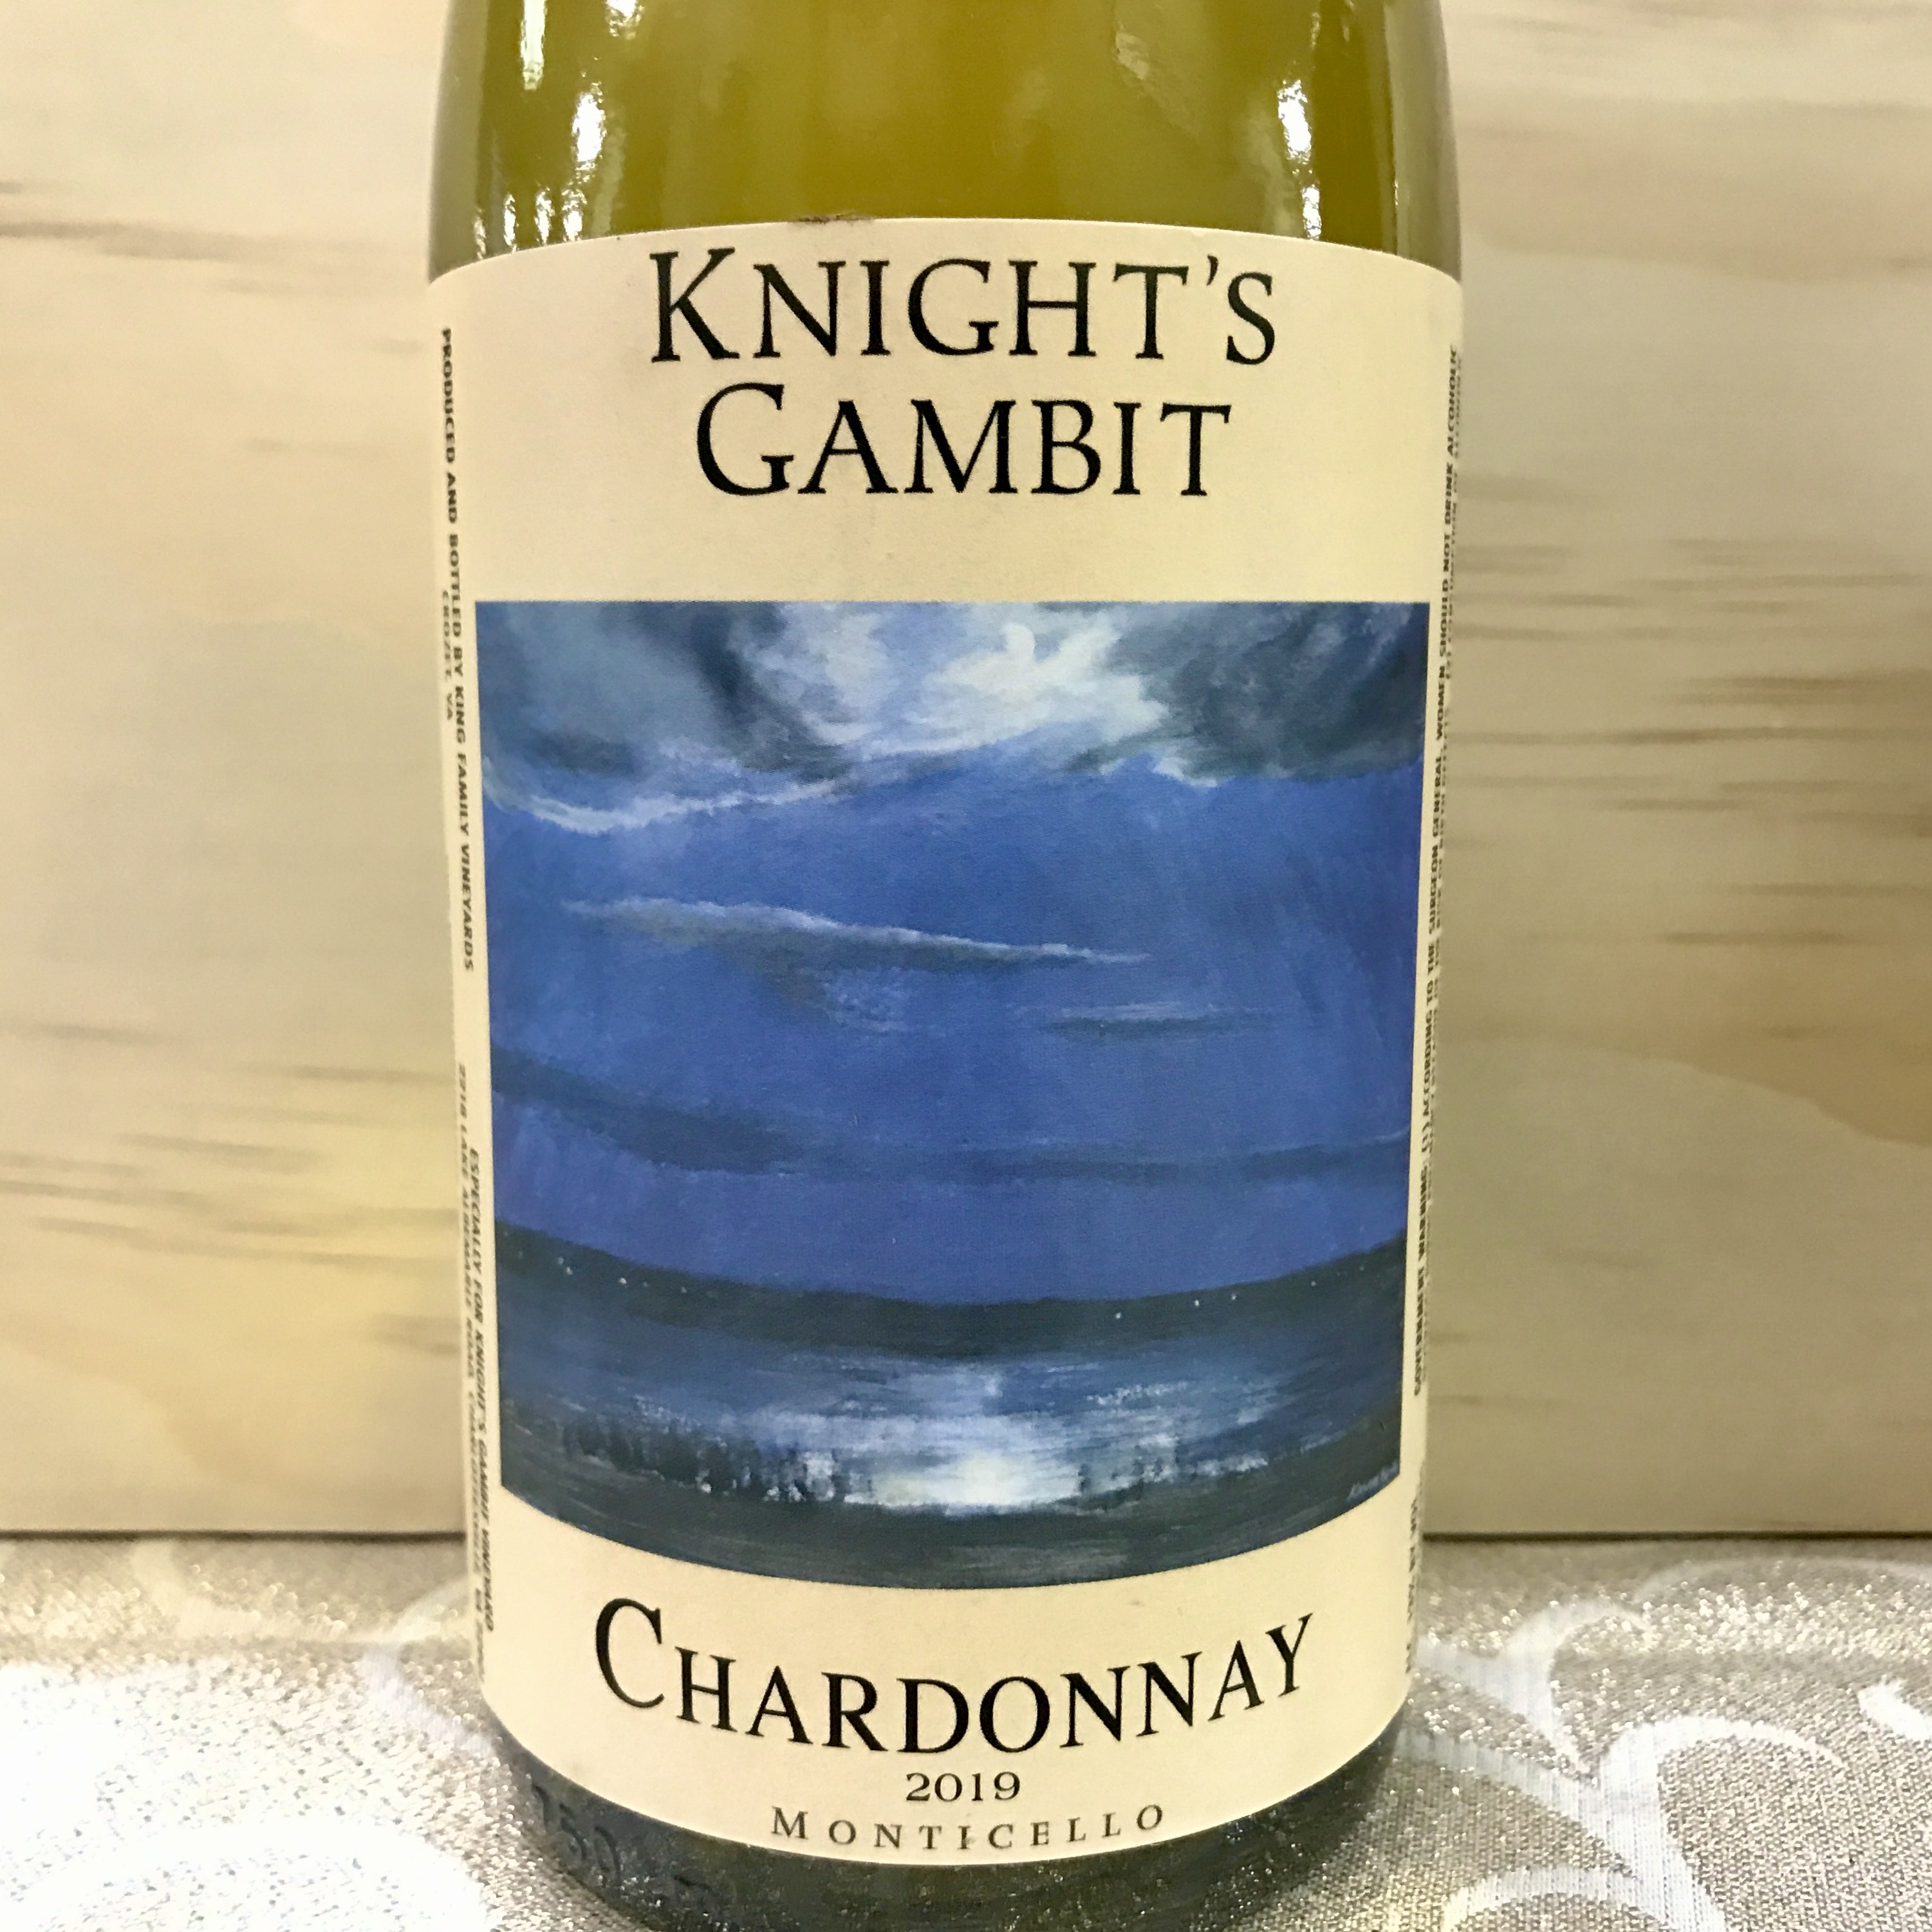 Knight's Gambit Chardonnay Monticello 2019